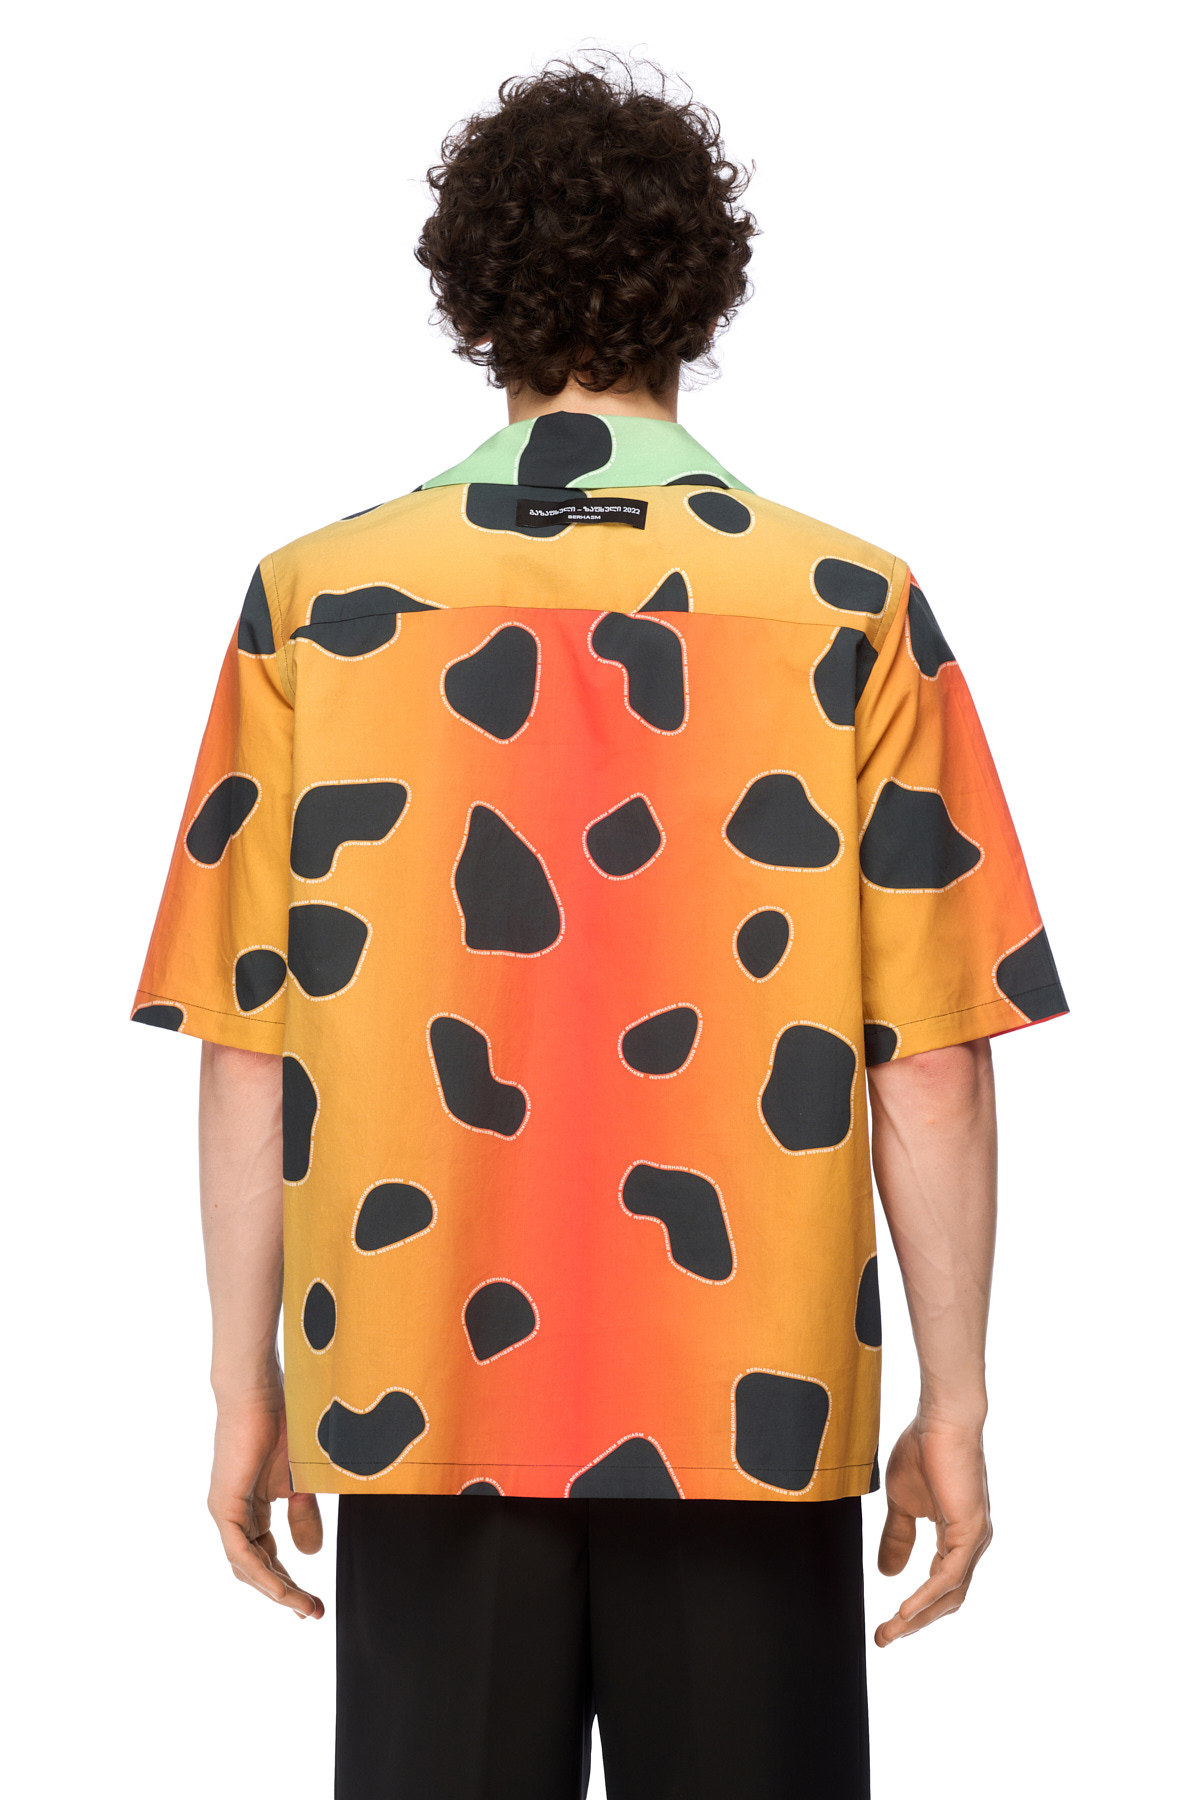 Рубашка с леопардовым принтом